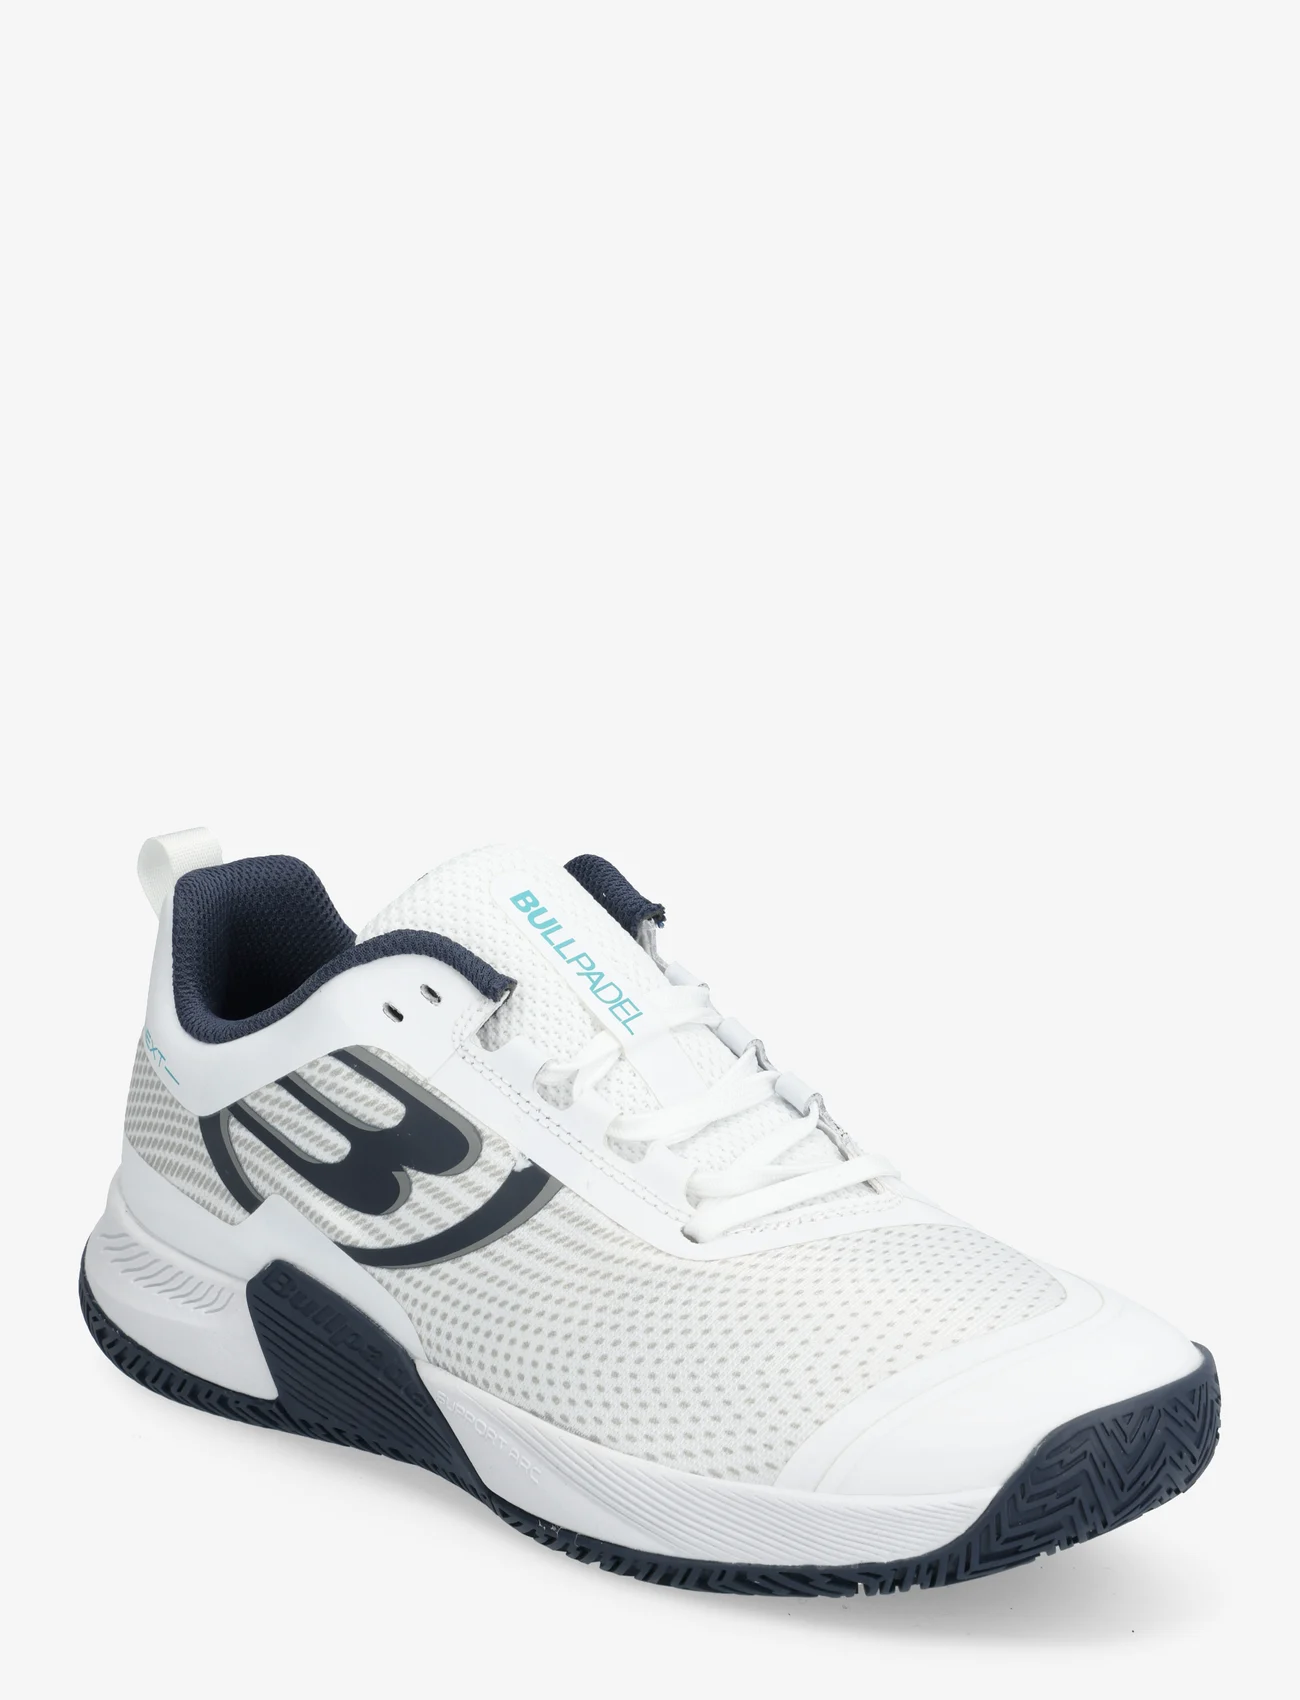 Bullpadel - NEXT HYBR PRO 22I - racketsports shoes - white/blue - 0